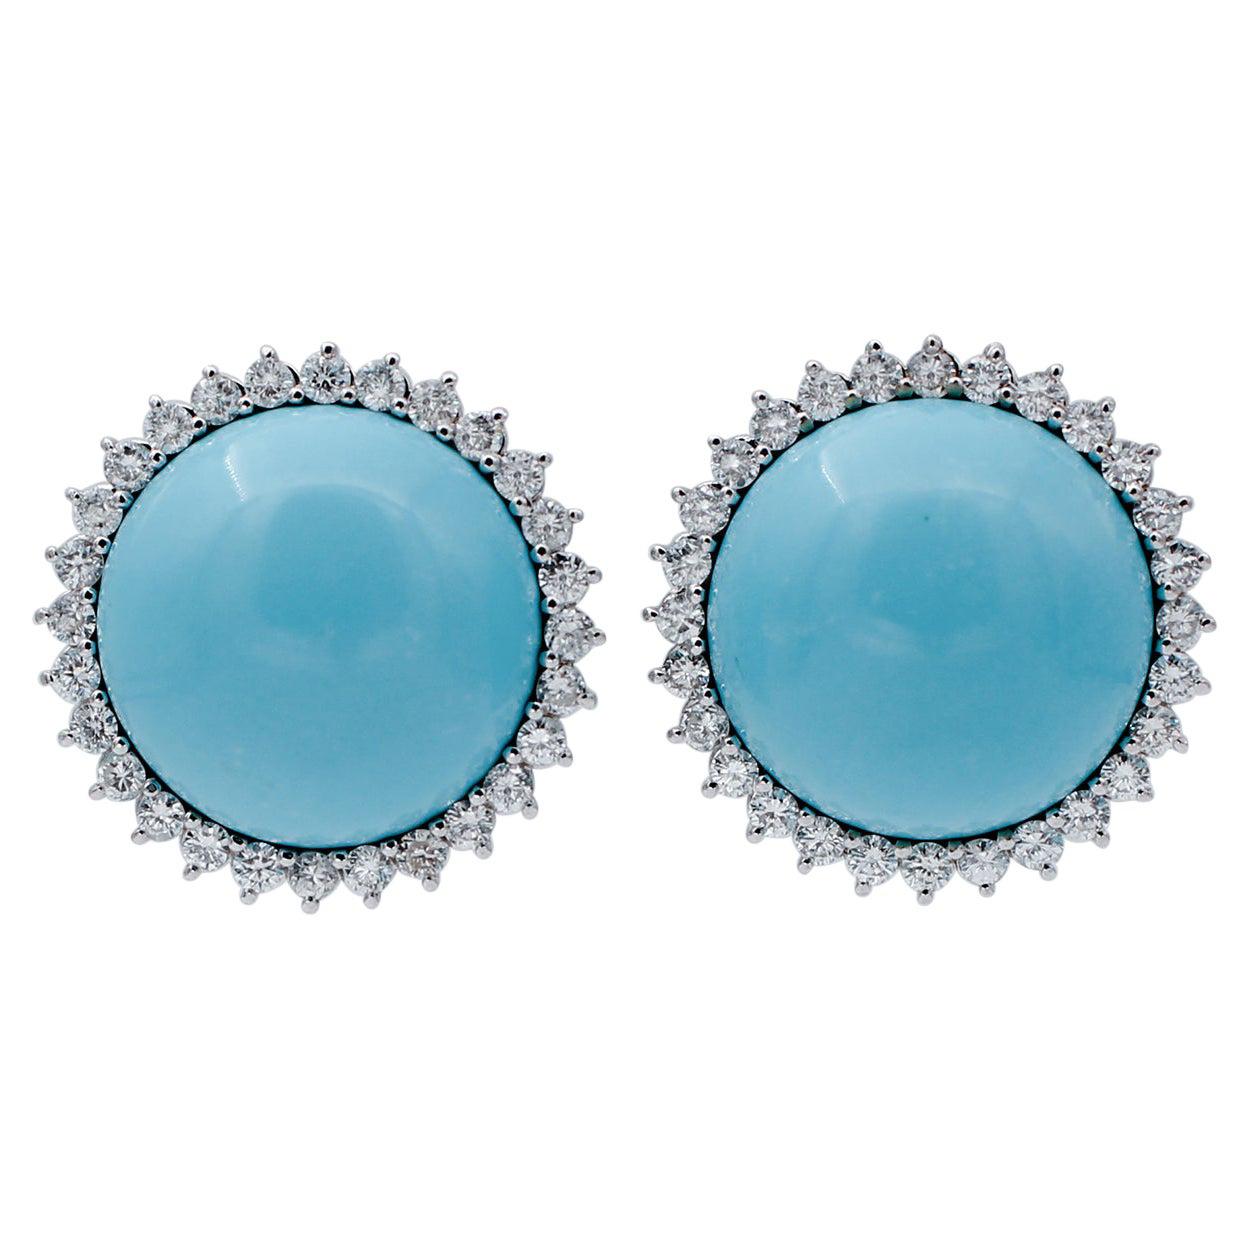 Turquoise, Diamonds, 14 Karat White Gold Stud Earrings